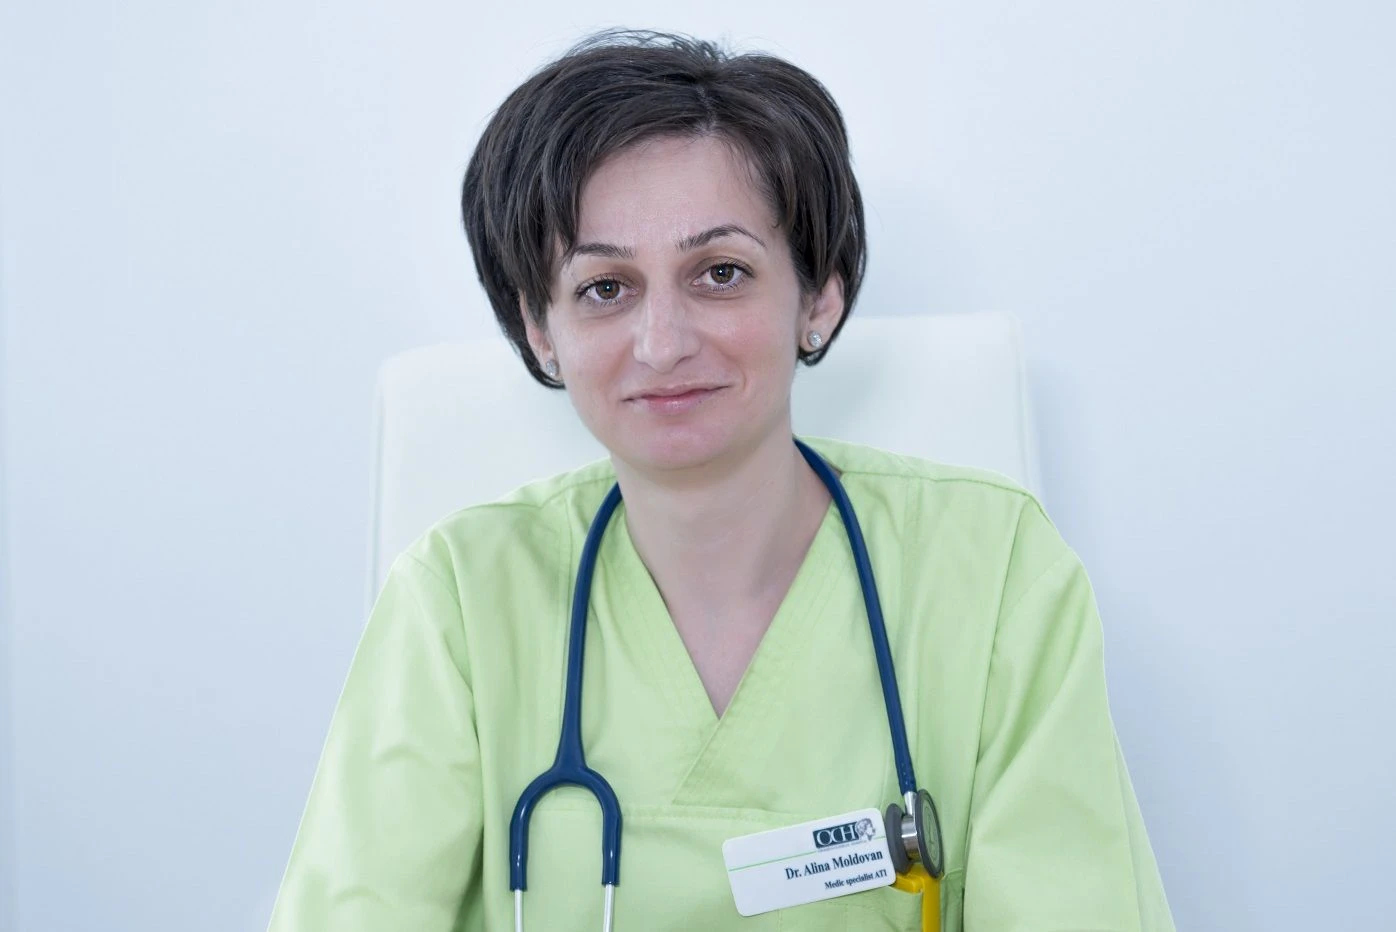 Dr. Alina Moldovan